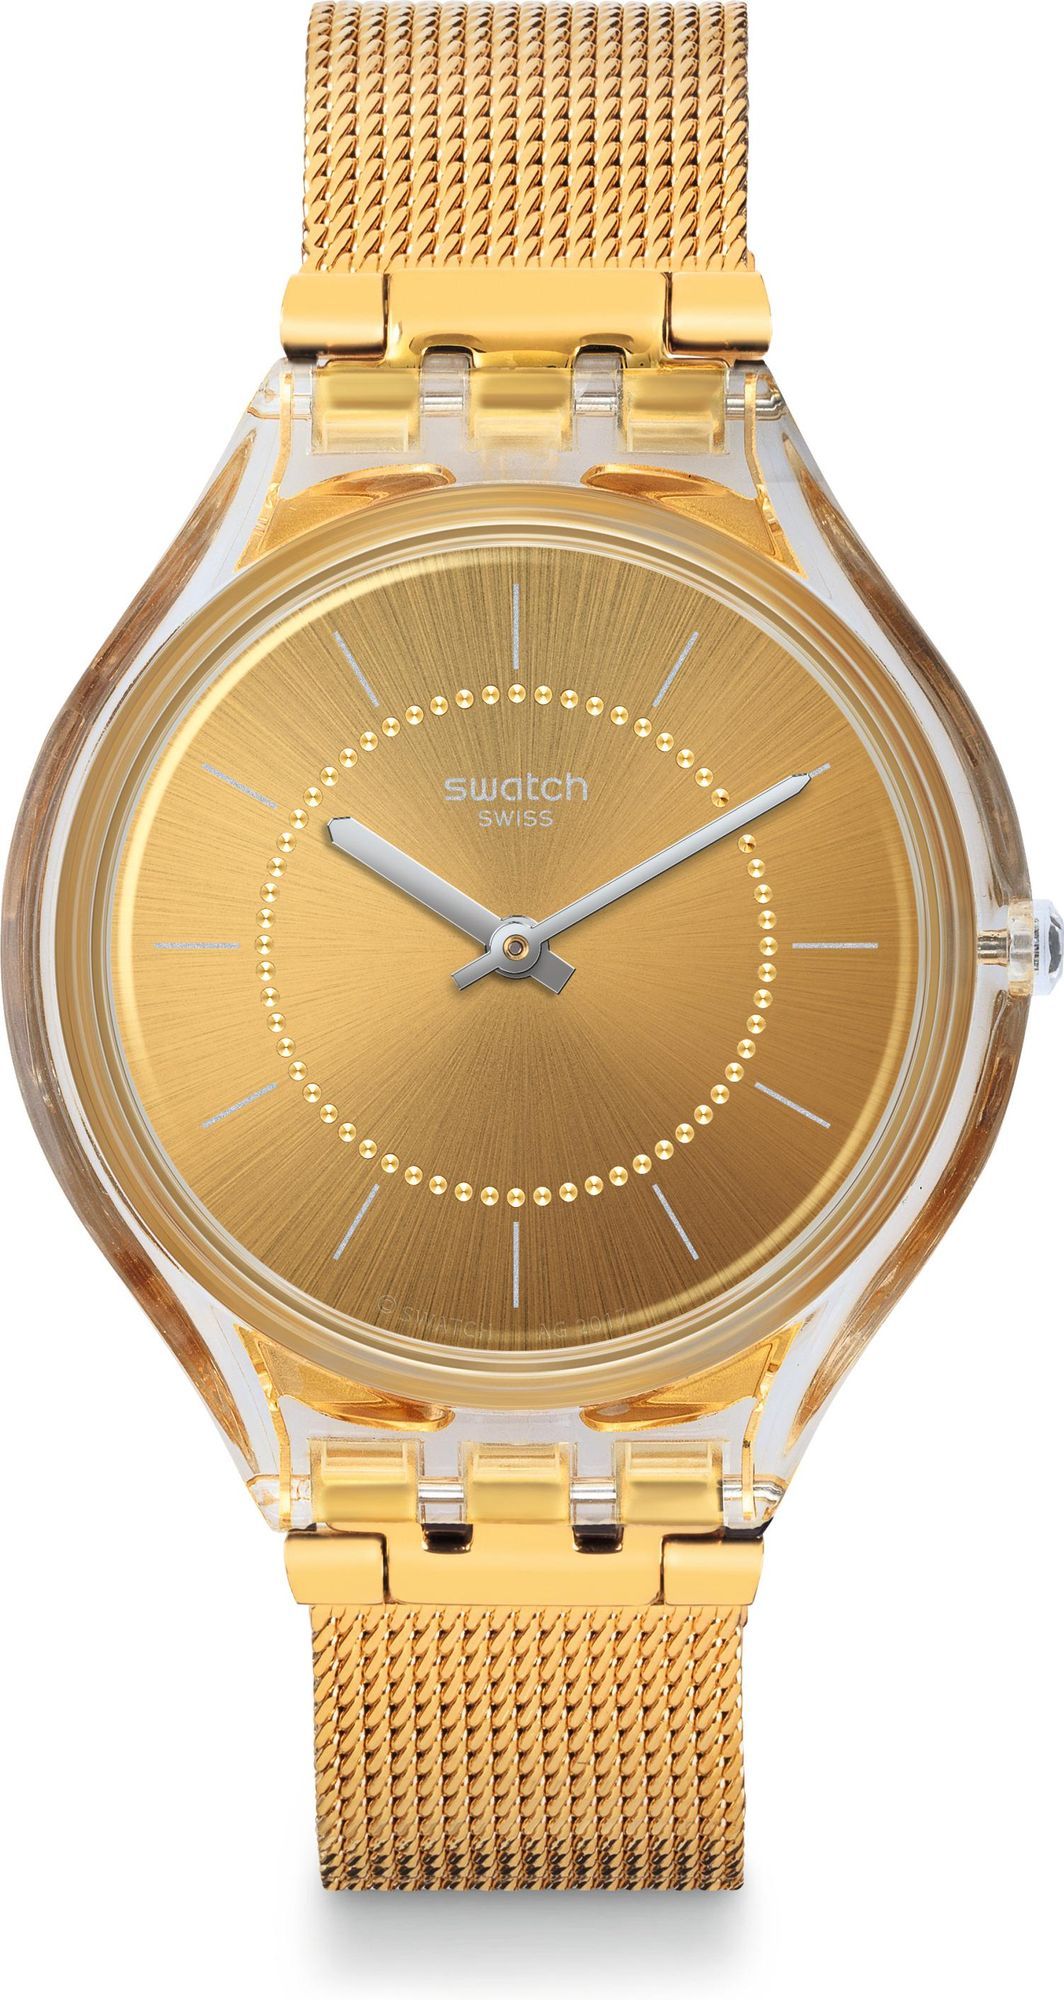 Часы свотч каталог. Наручные часы Swatch svuk101m. Часы свотч Swiss женские. Часы швейцарские женские Swatch. Часы Swatch Swiss женские тонкие.